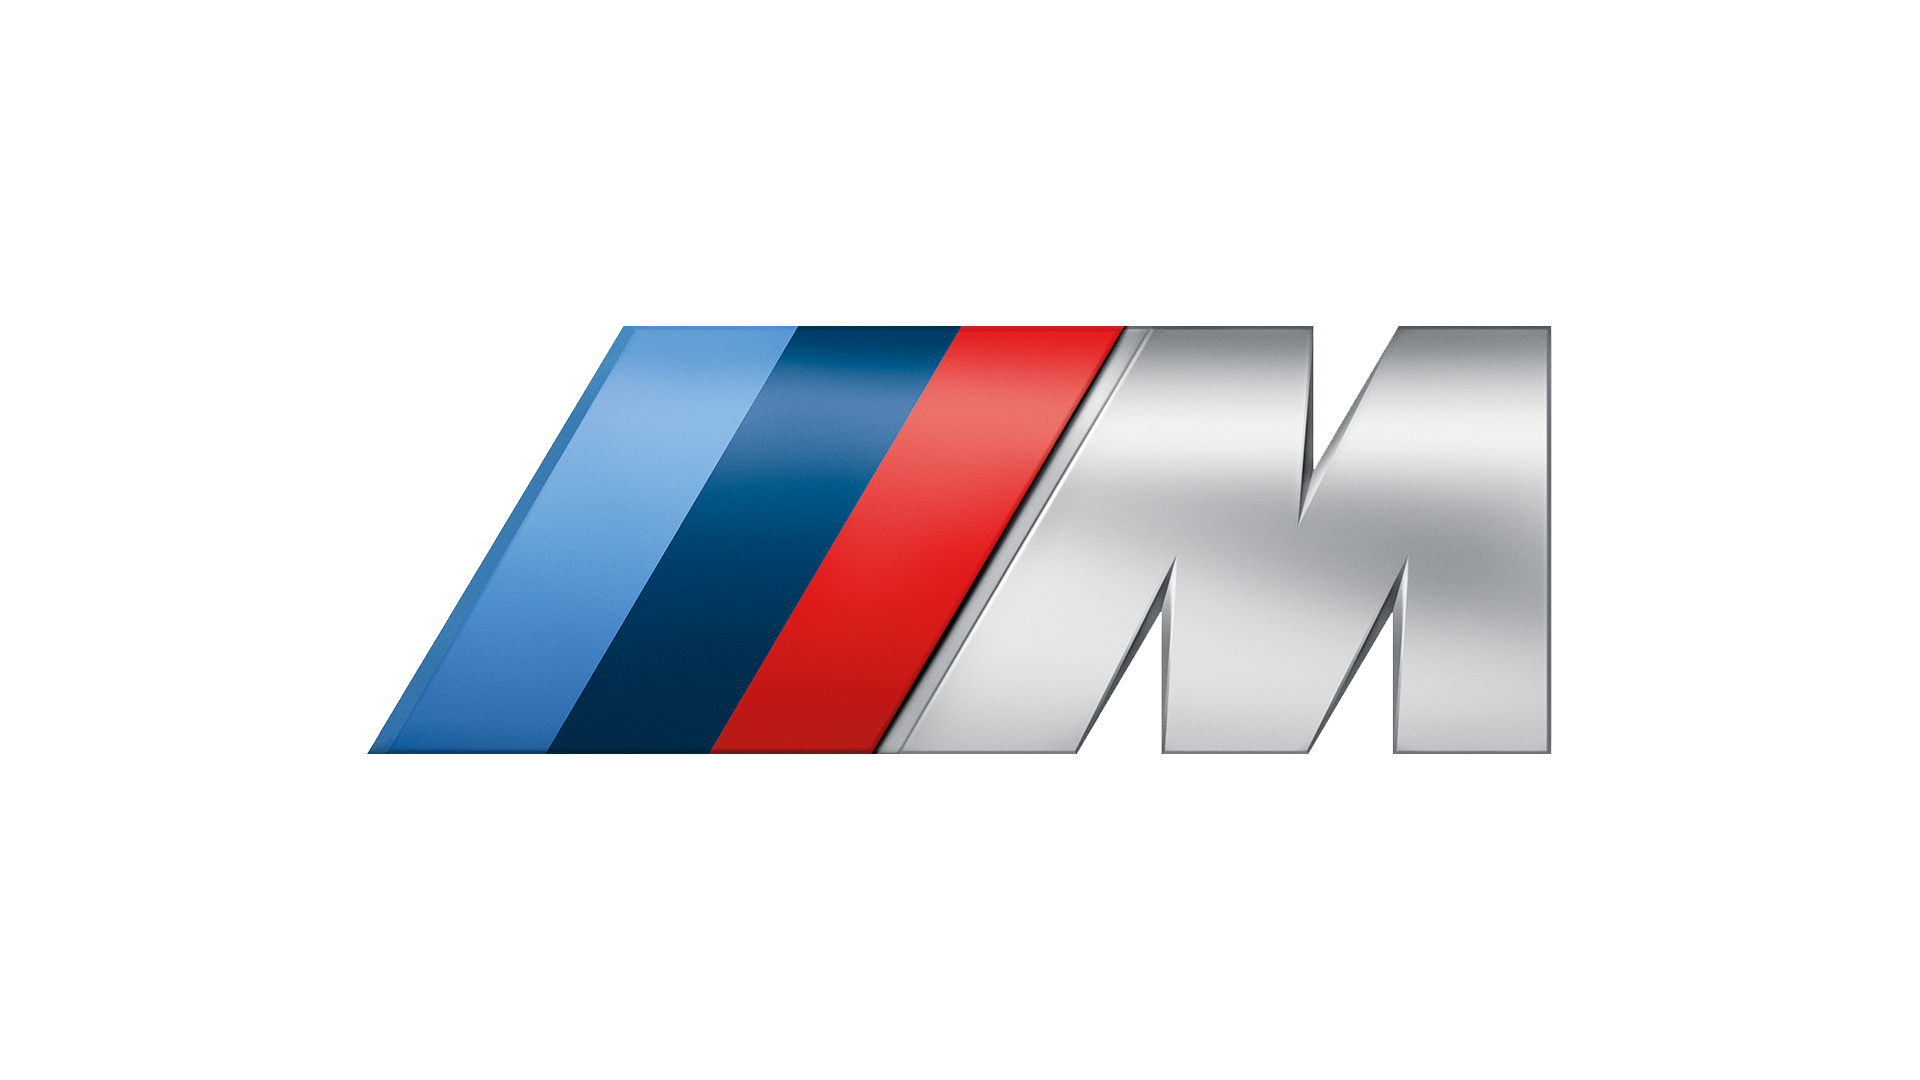 Bmw m power. BMW m3 logo. BMW M logo. БМВ м5 лого. BMW m5 logo.